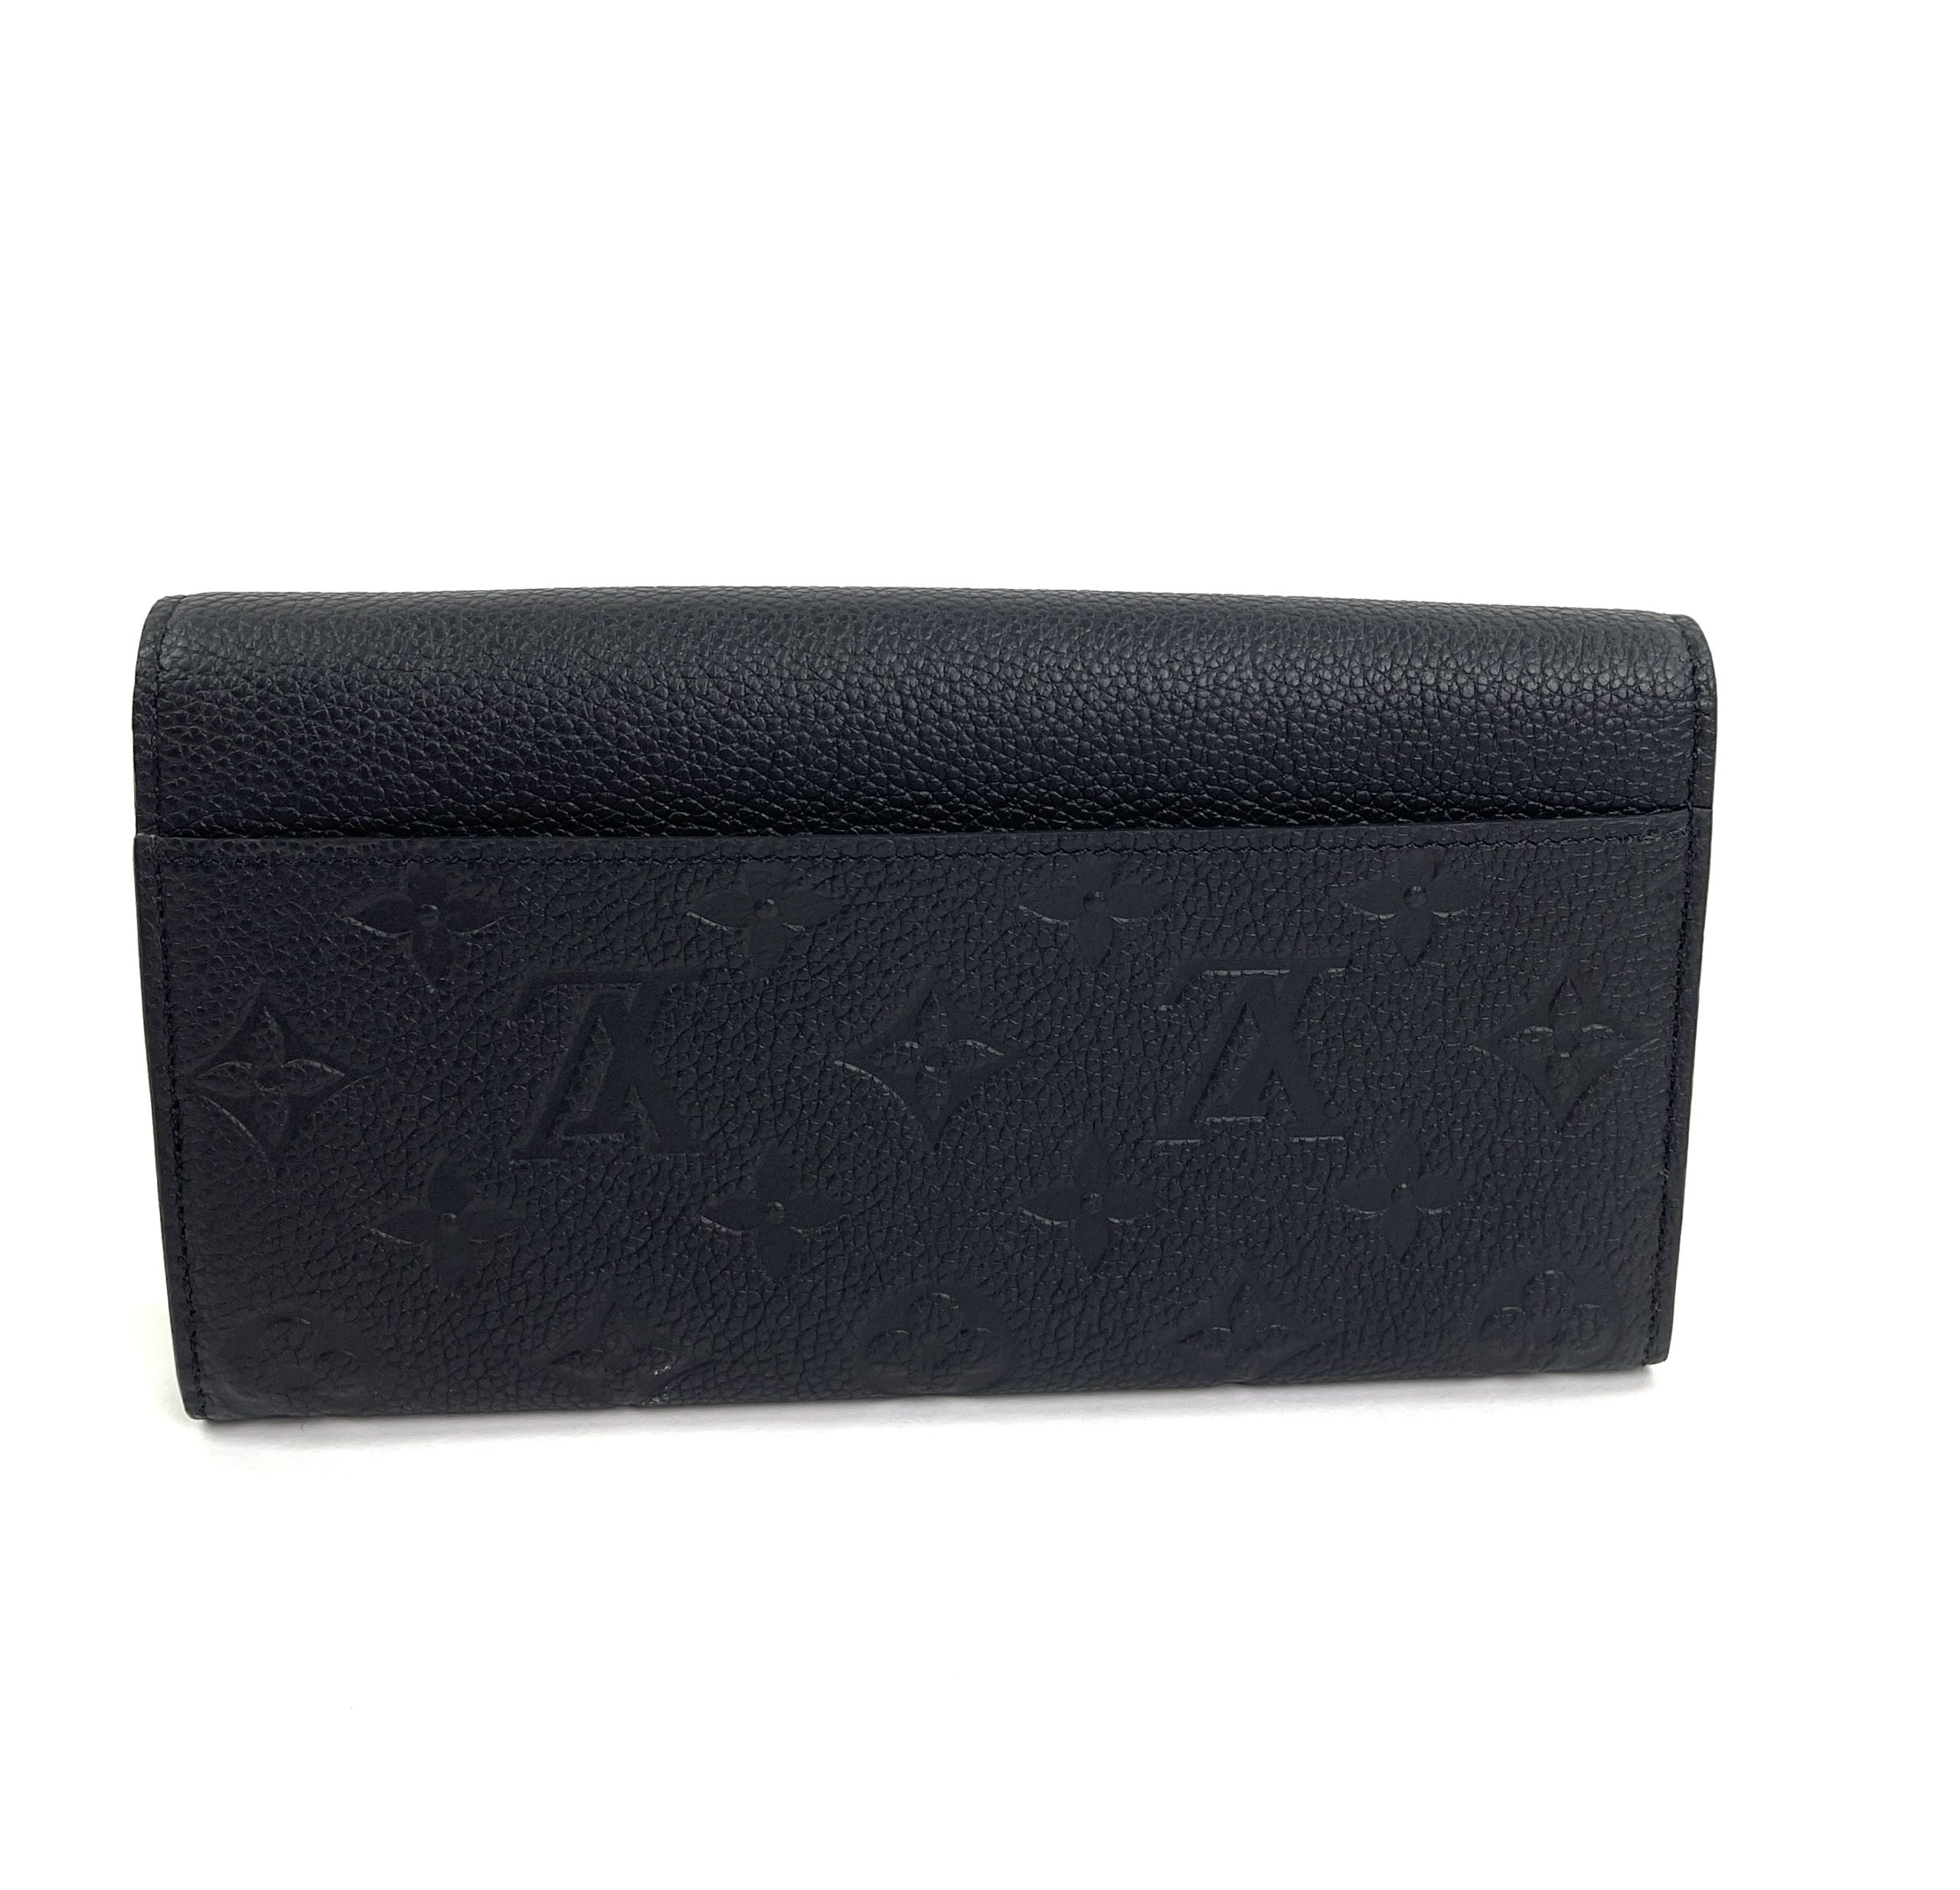 Louis Vuitton Black Monogram Empreinte Leather Sarah Wallet Louis